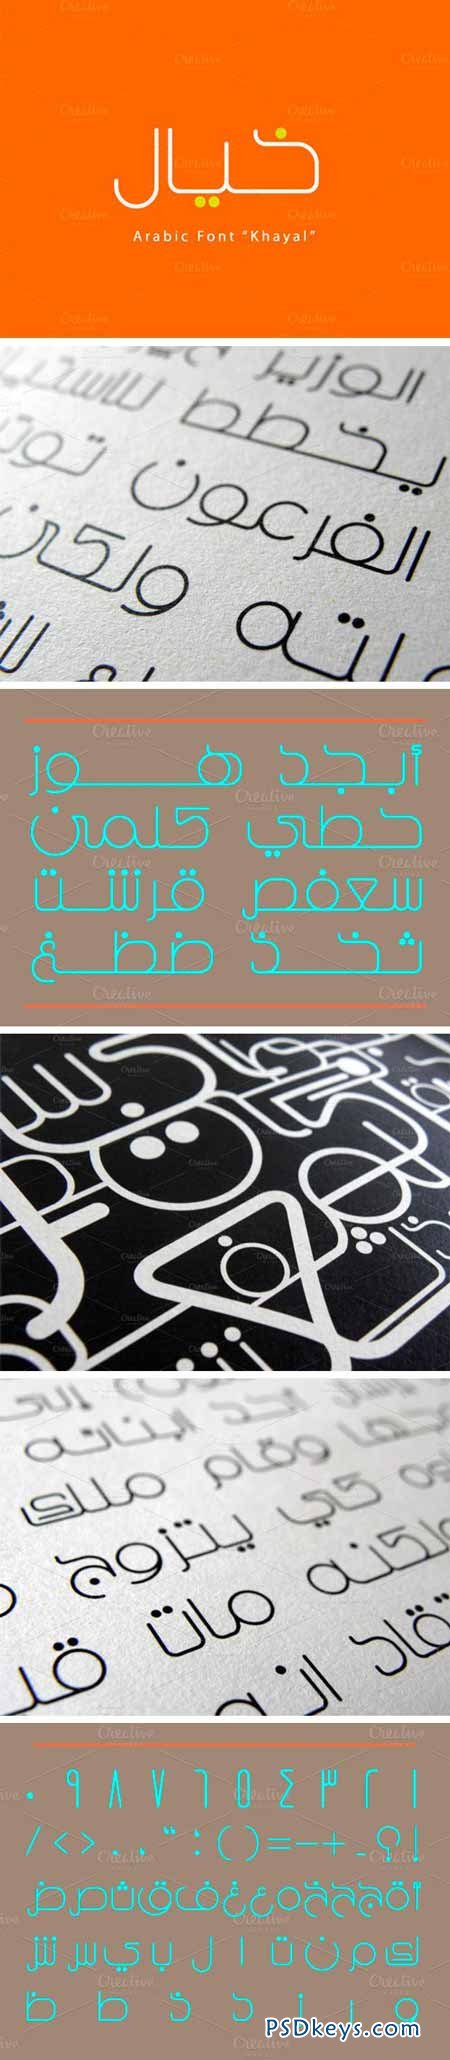 Khayal Arabic Font for $20